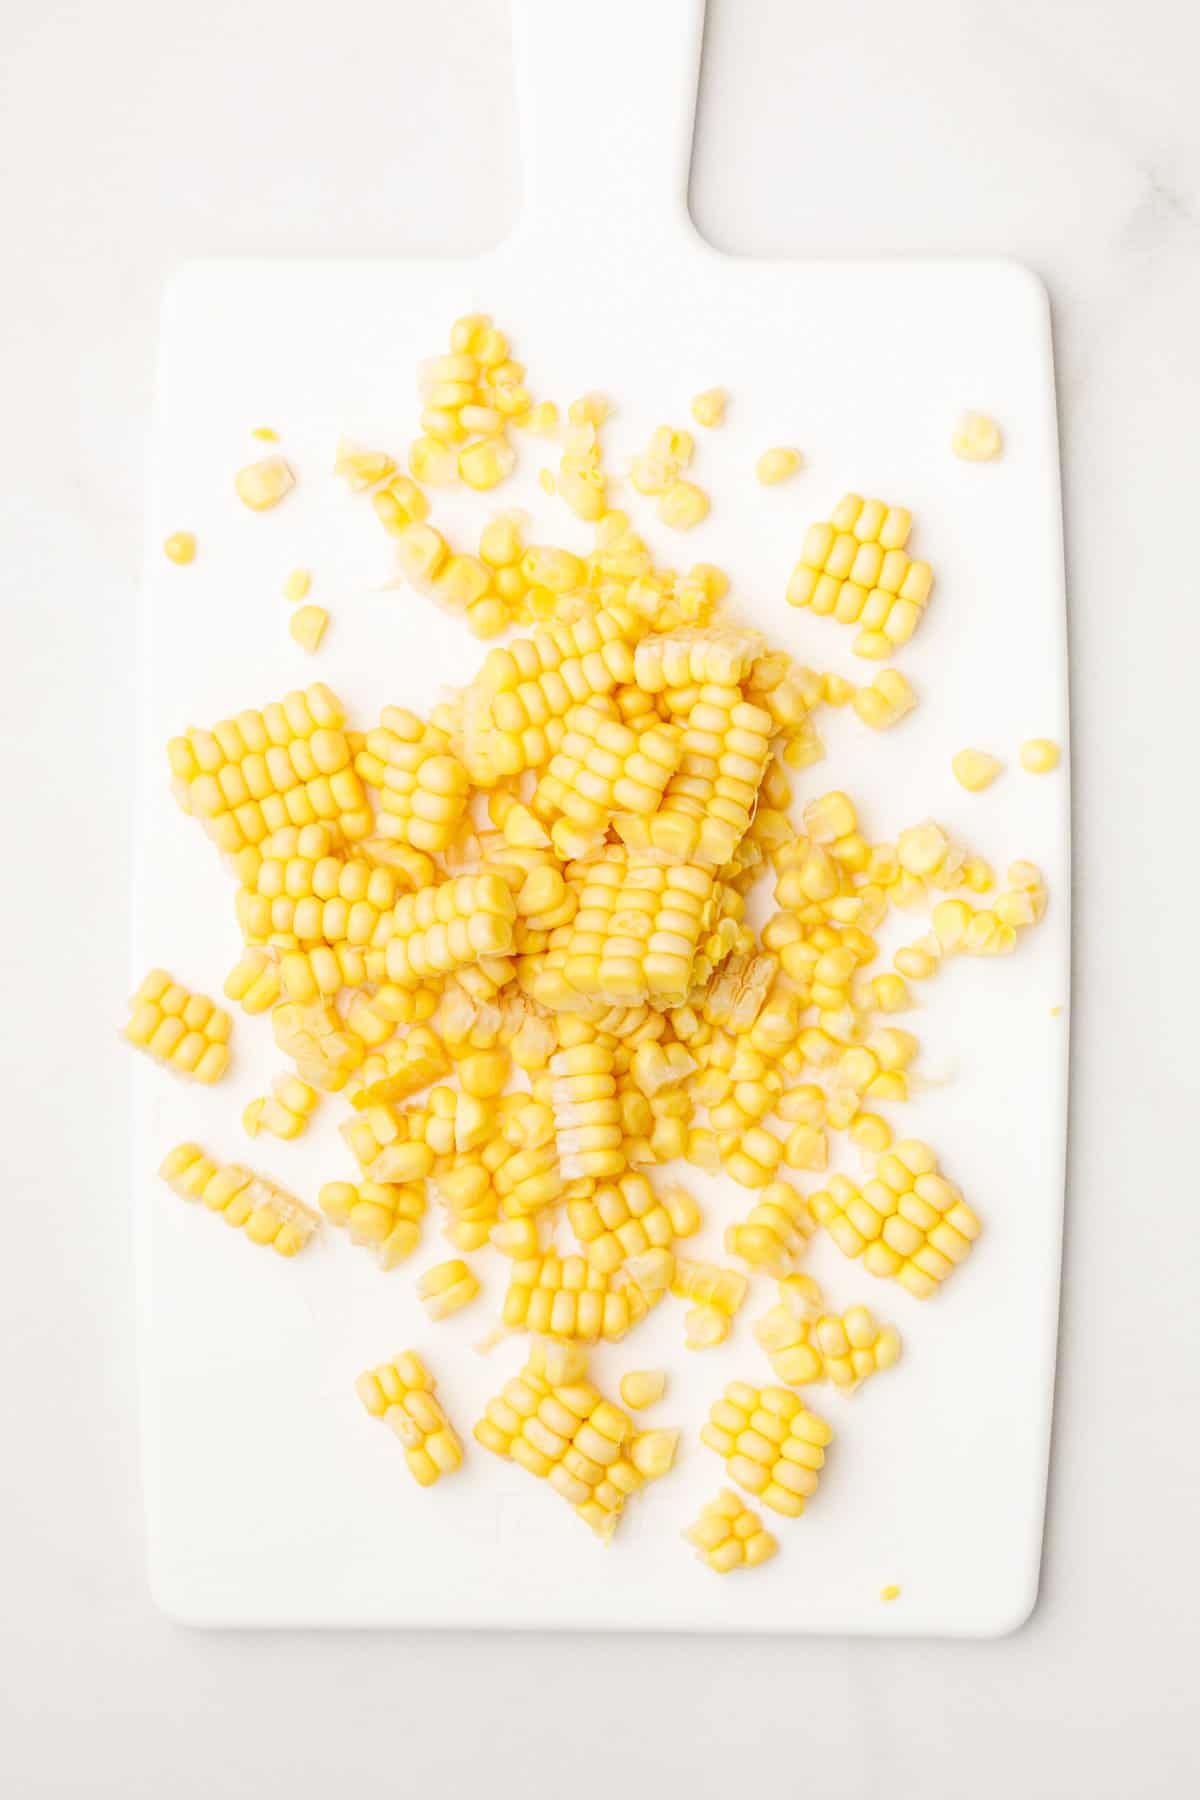 corn cut off the cob sitting on a white cutting board